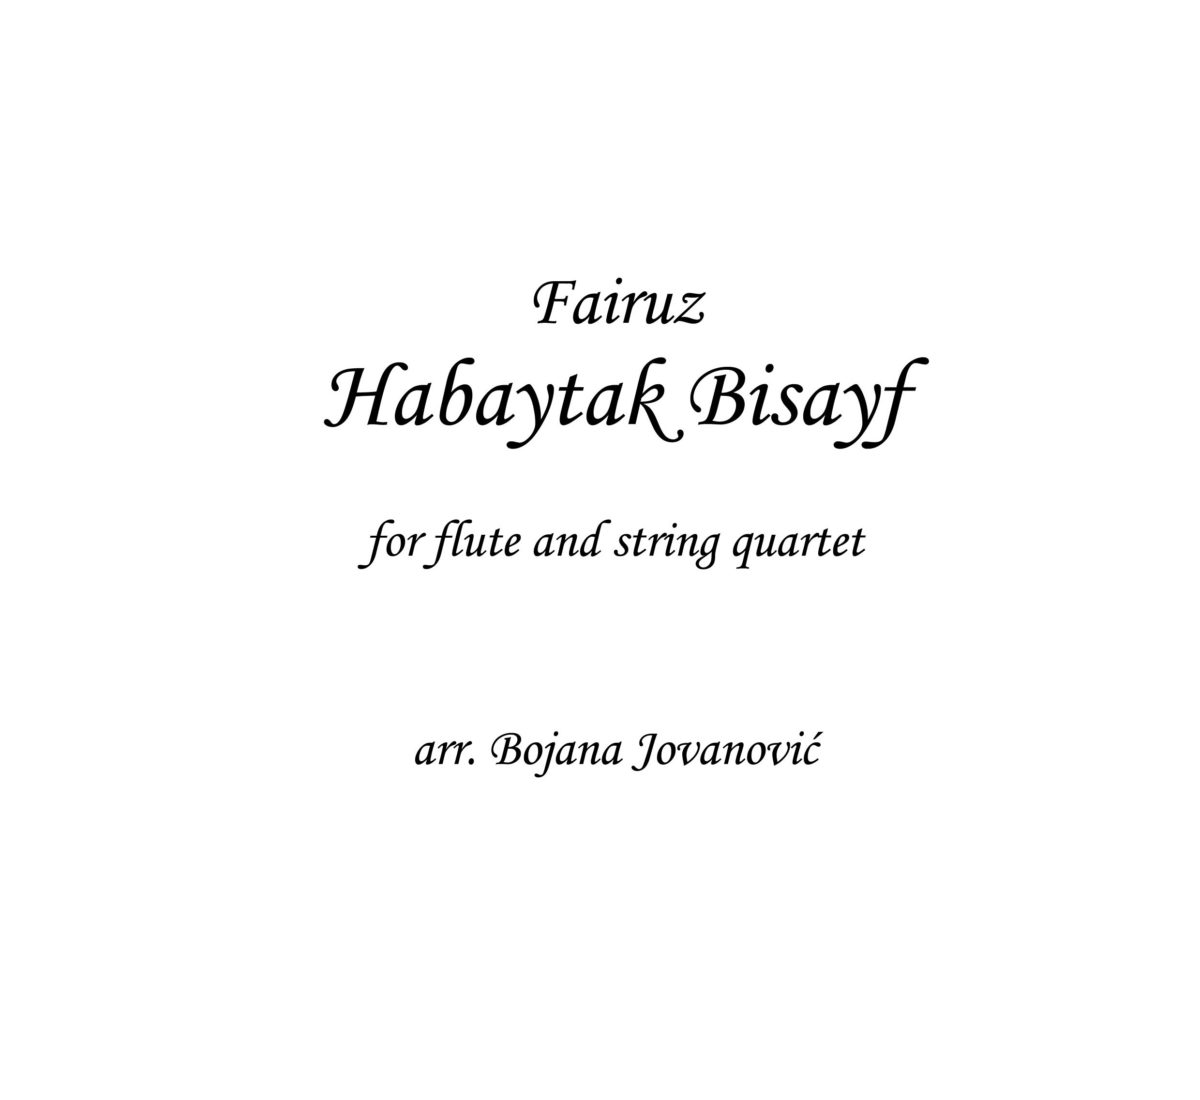 Habaytak Bisayf (Fairuz) - Sheet Music